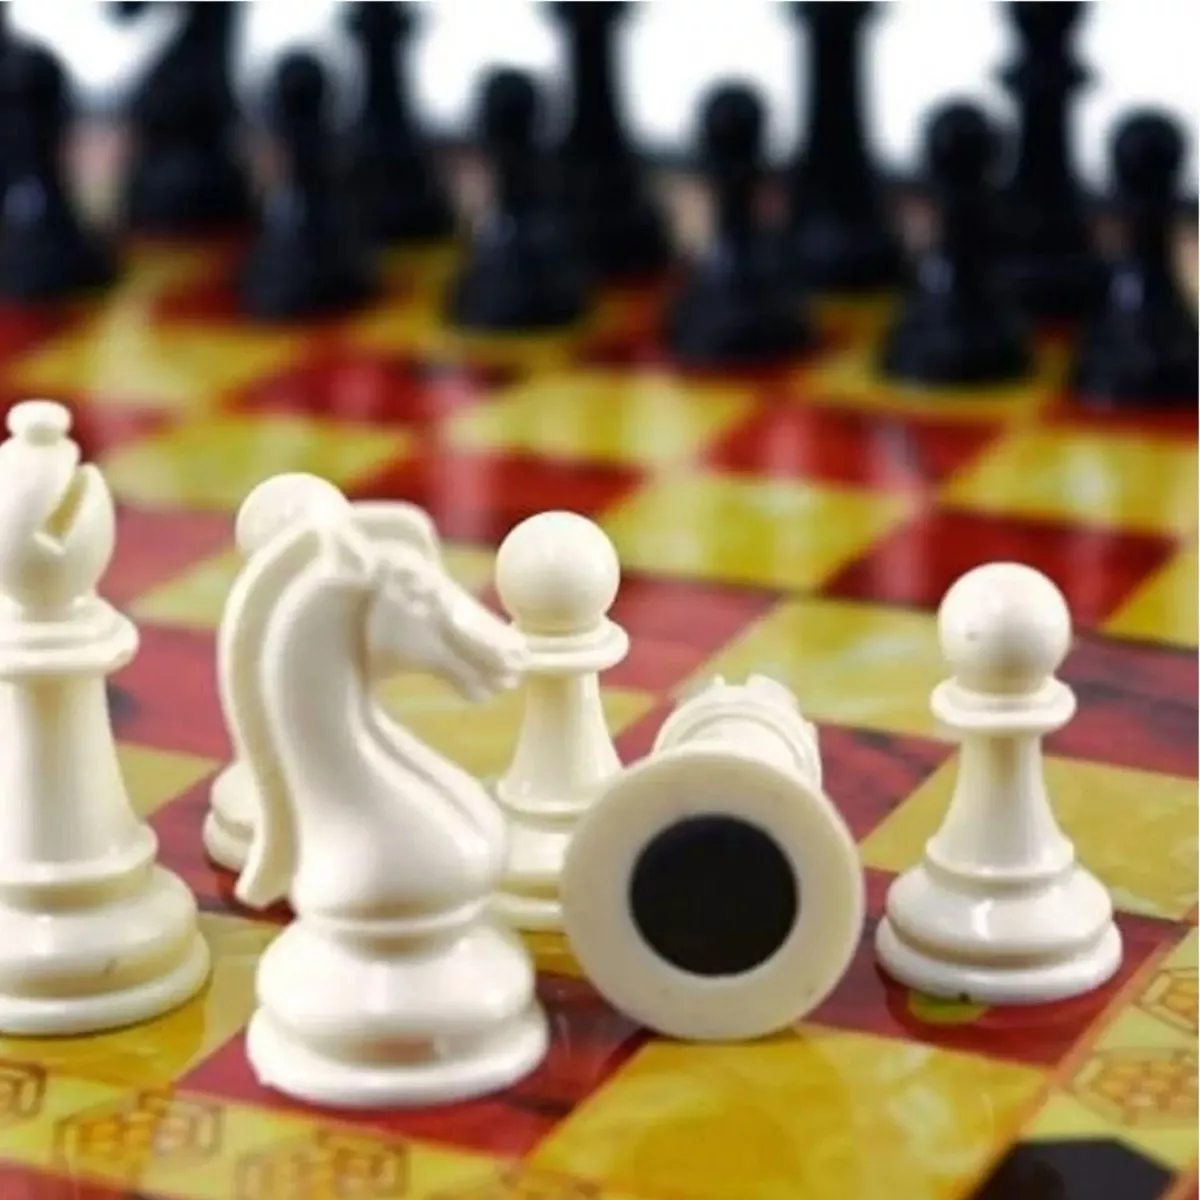 Terceira imagem para pesquisa de tabuleiro de xadrez